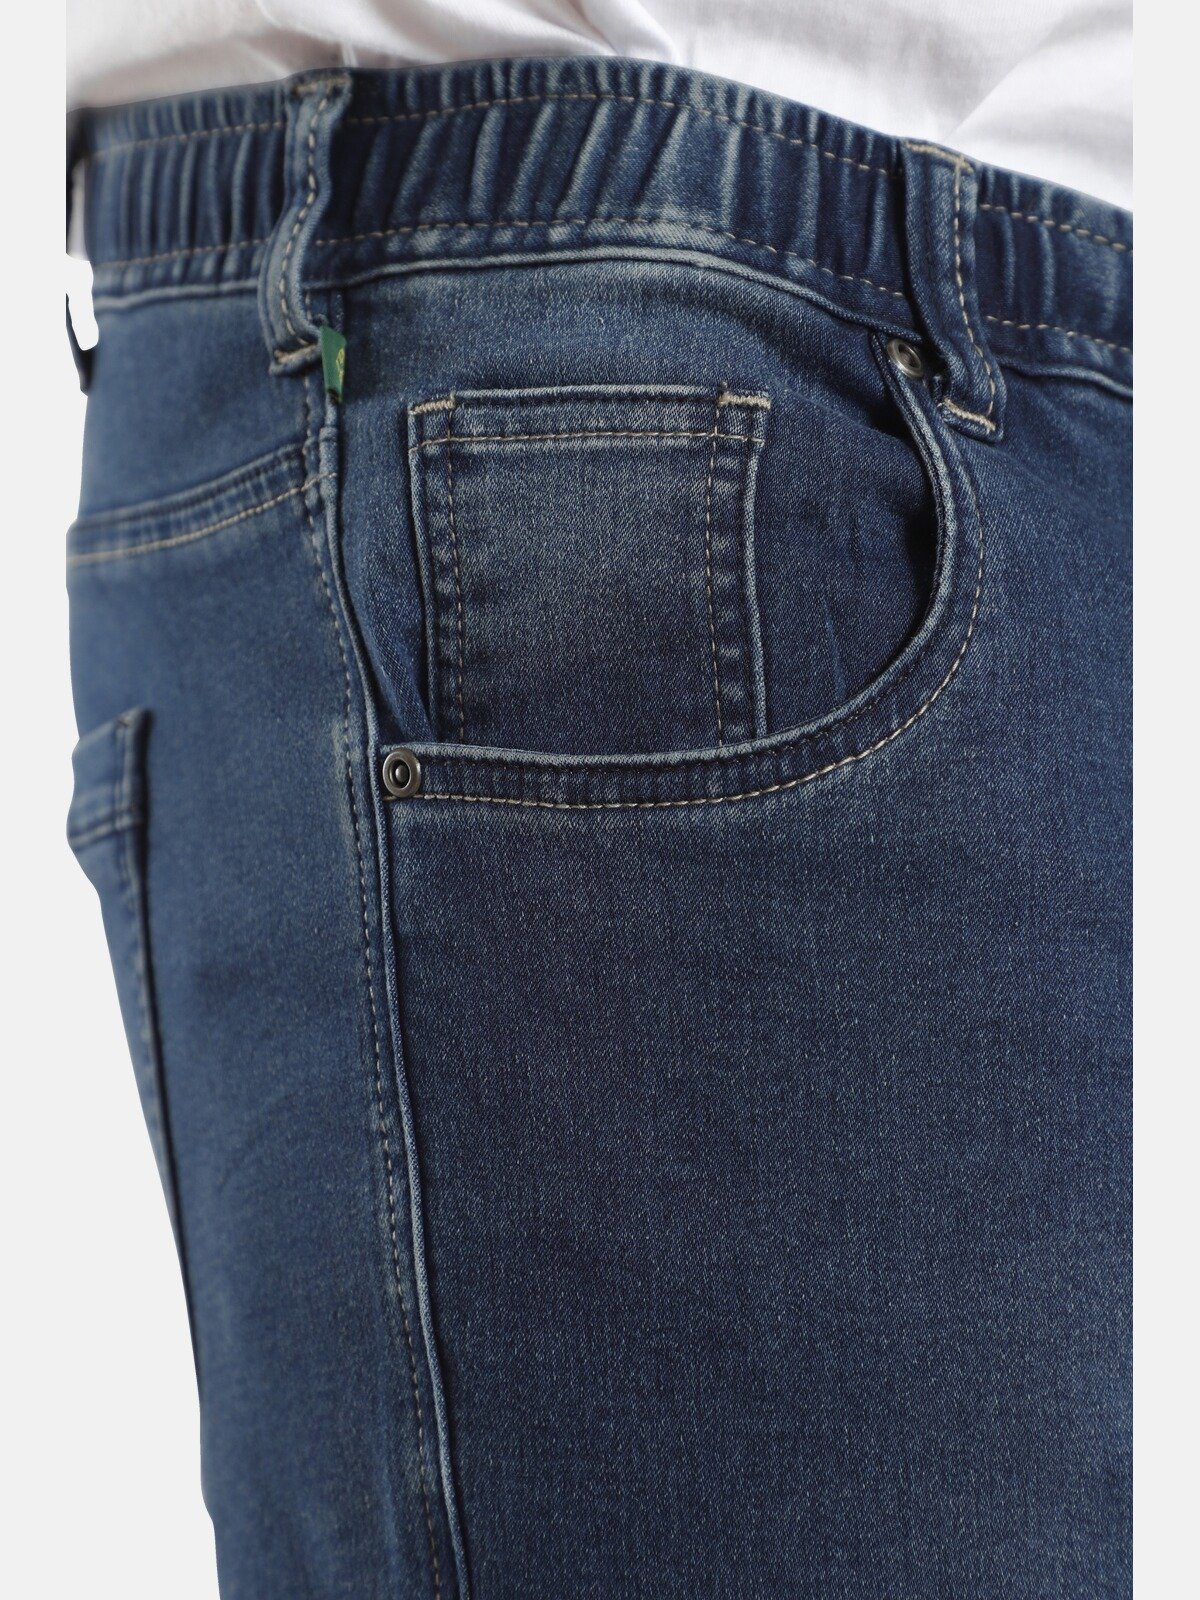 blau Colby 5-Pocket-Jeans Charles bequem KEYLAN so Jogginghose BARON wie eine